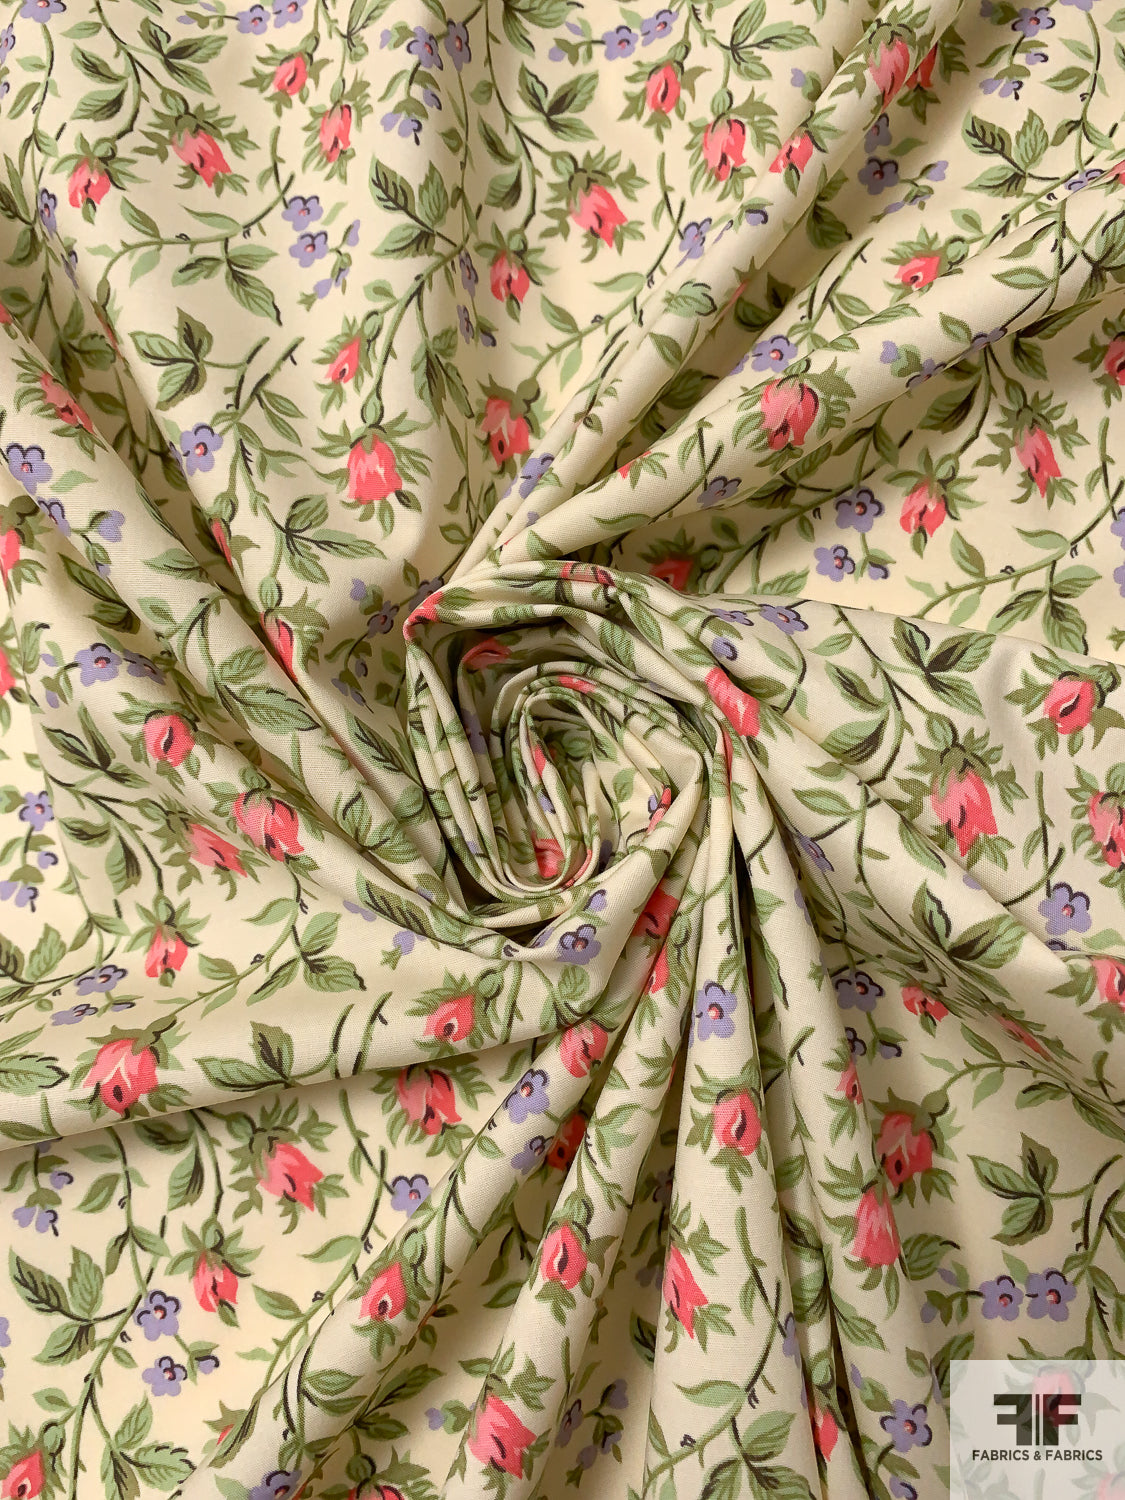 Ditsy Floral Printed Stretch Cotton Poplin - Sand/Green/Lavender/Pink